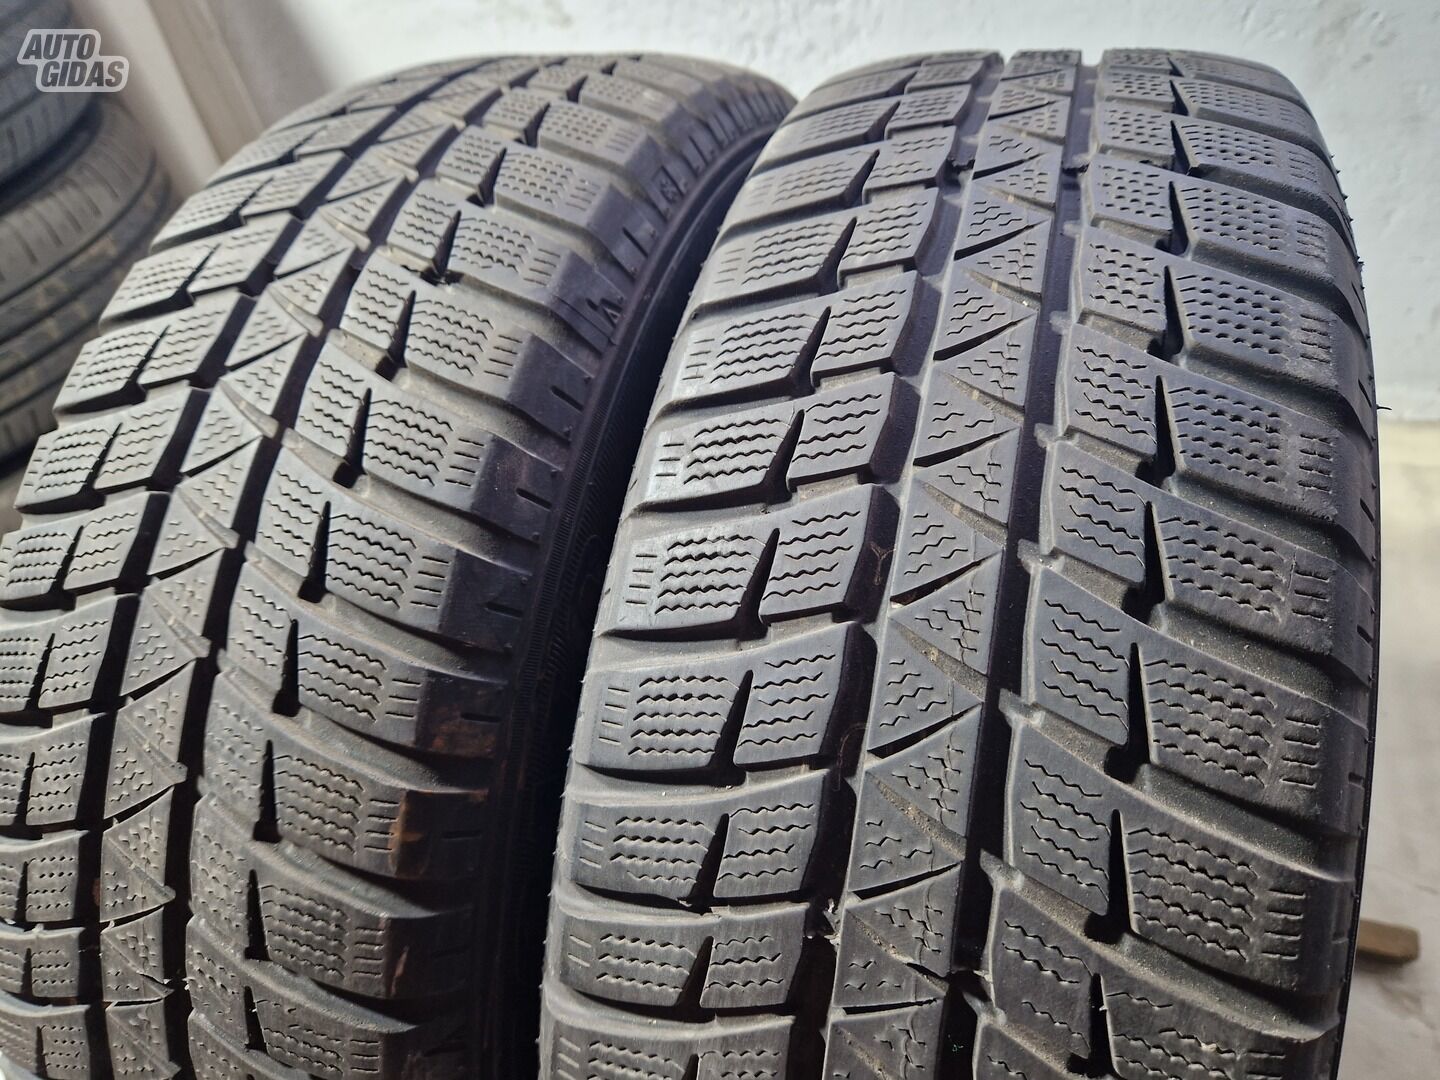 Sumitomo 6-7mm, 2020m R15 winter tyres passanger car